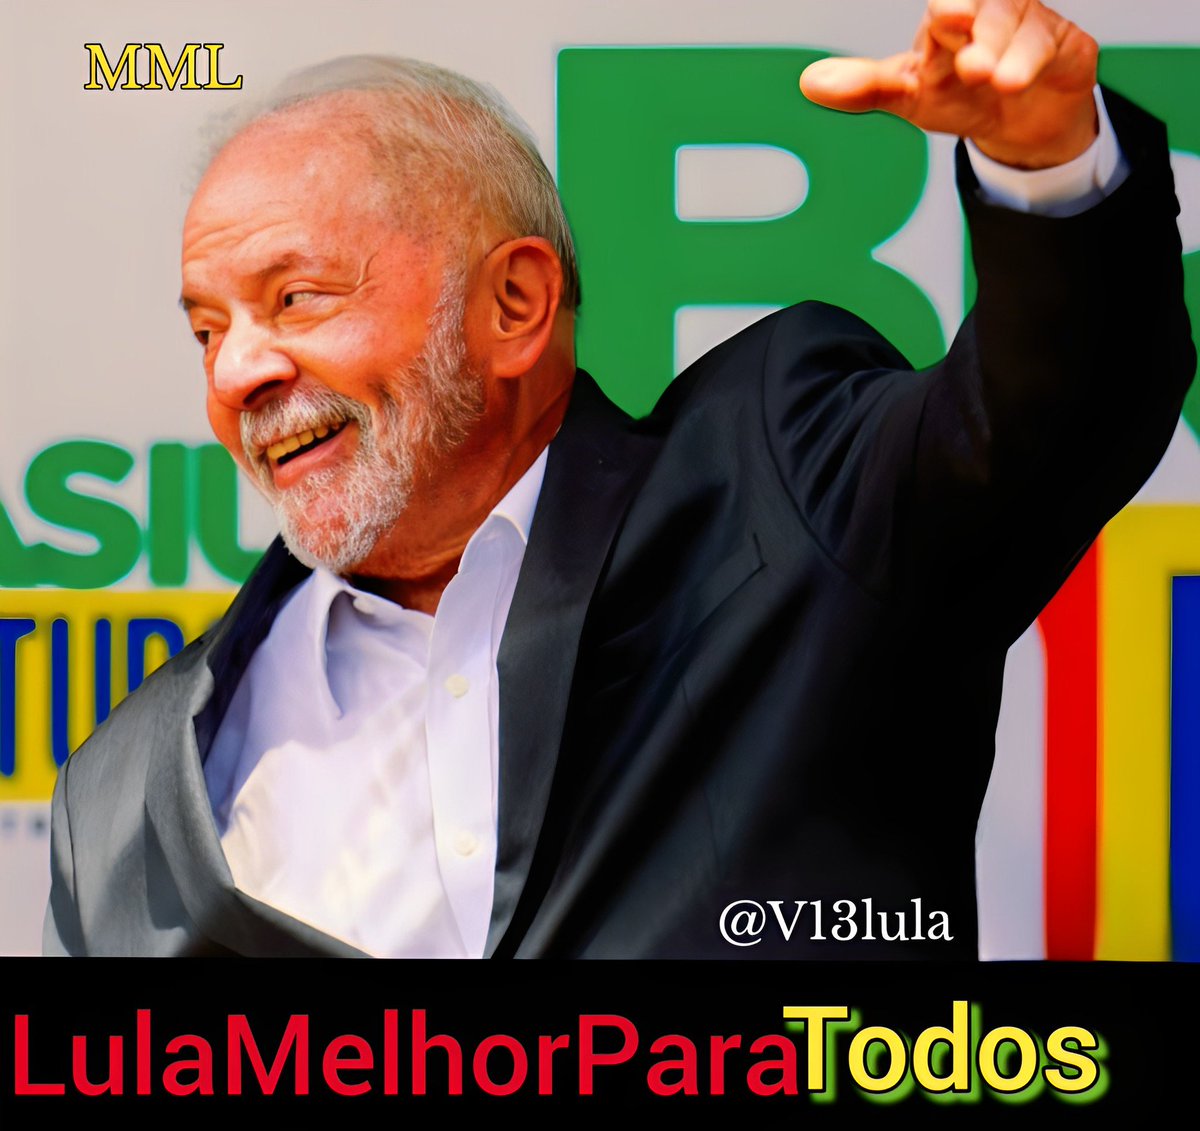 #LulaBrasilEmFoco
#LulaMelhorParaTodos 
#MML
SDV 
RT 🚩♀️👊🏽